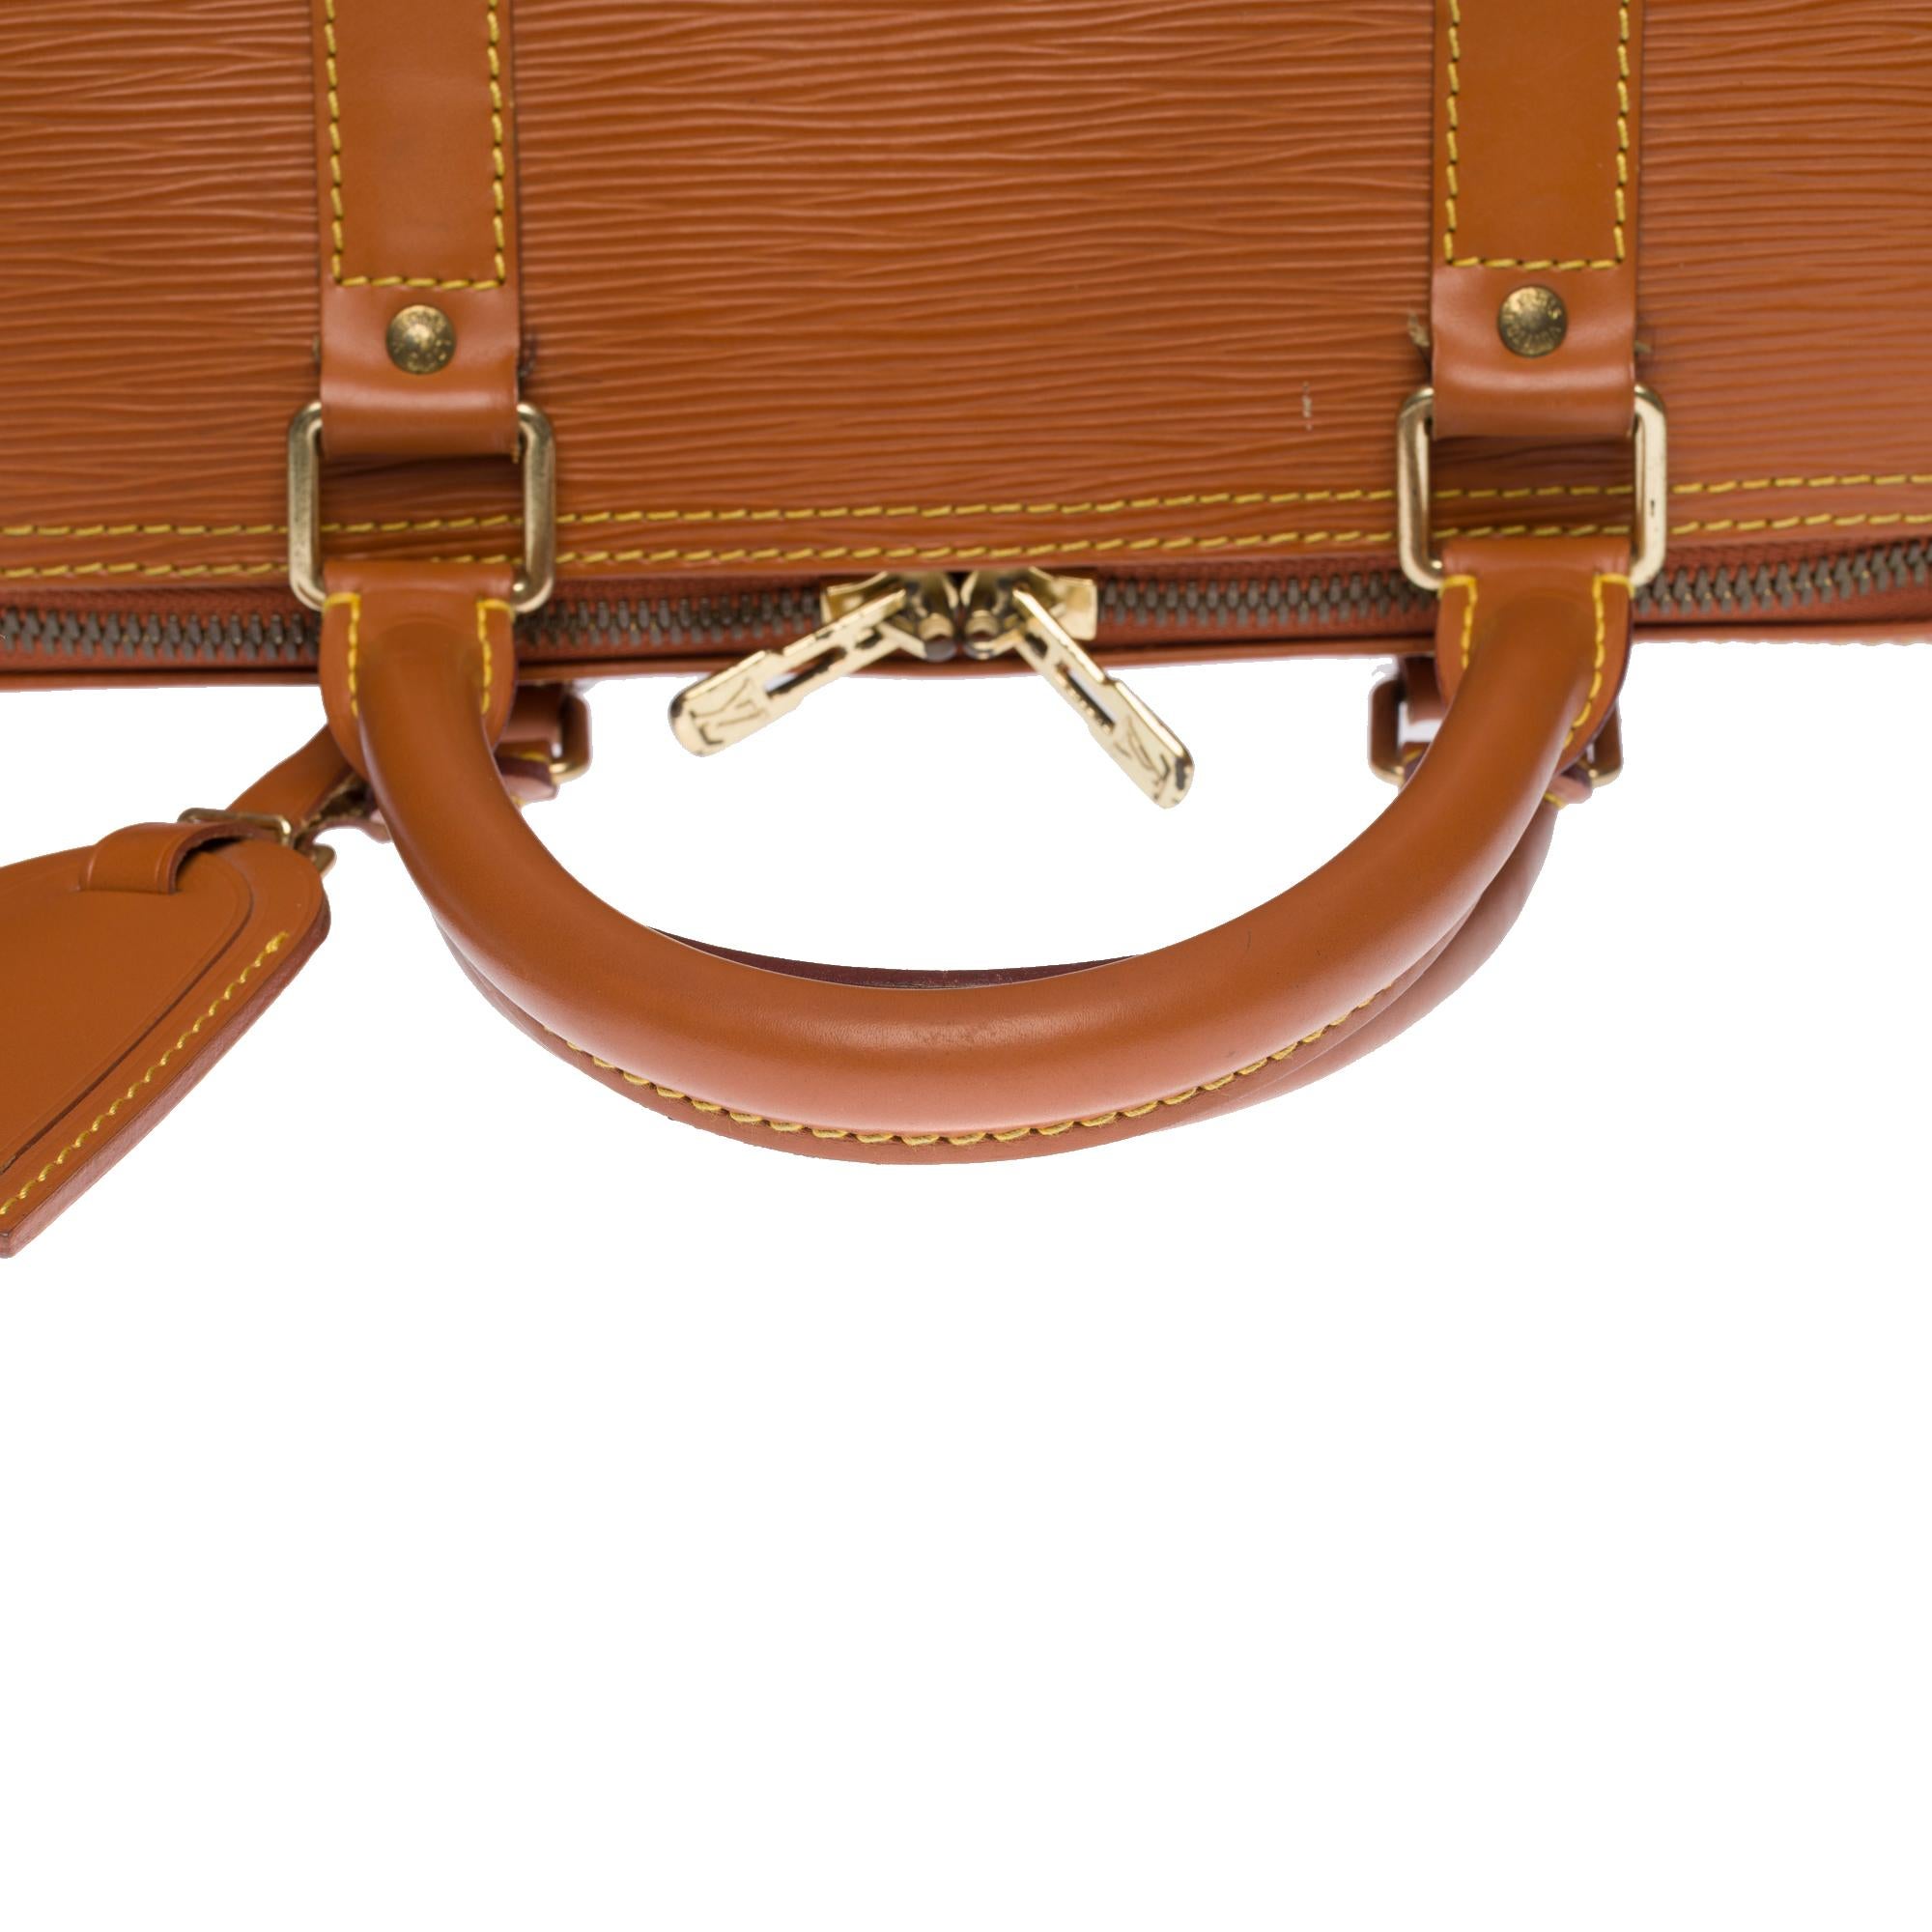 Louis Vuitton Keepall 55 Travel bag in cognac épi leather 3